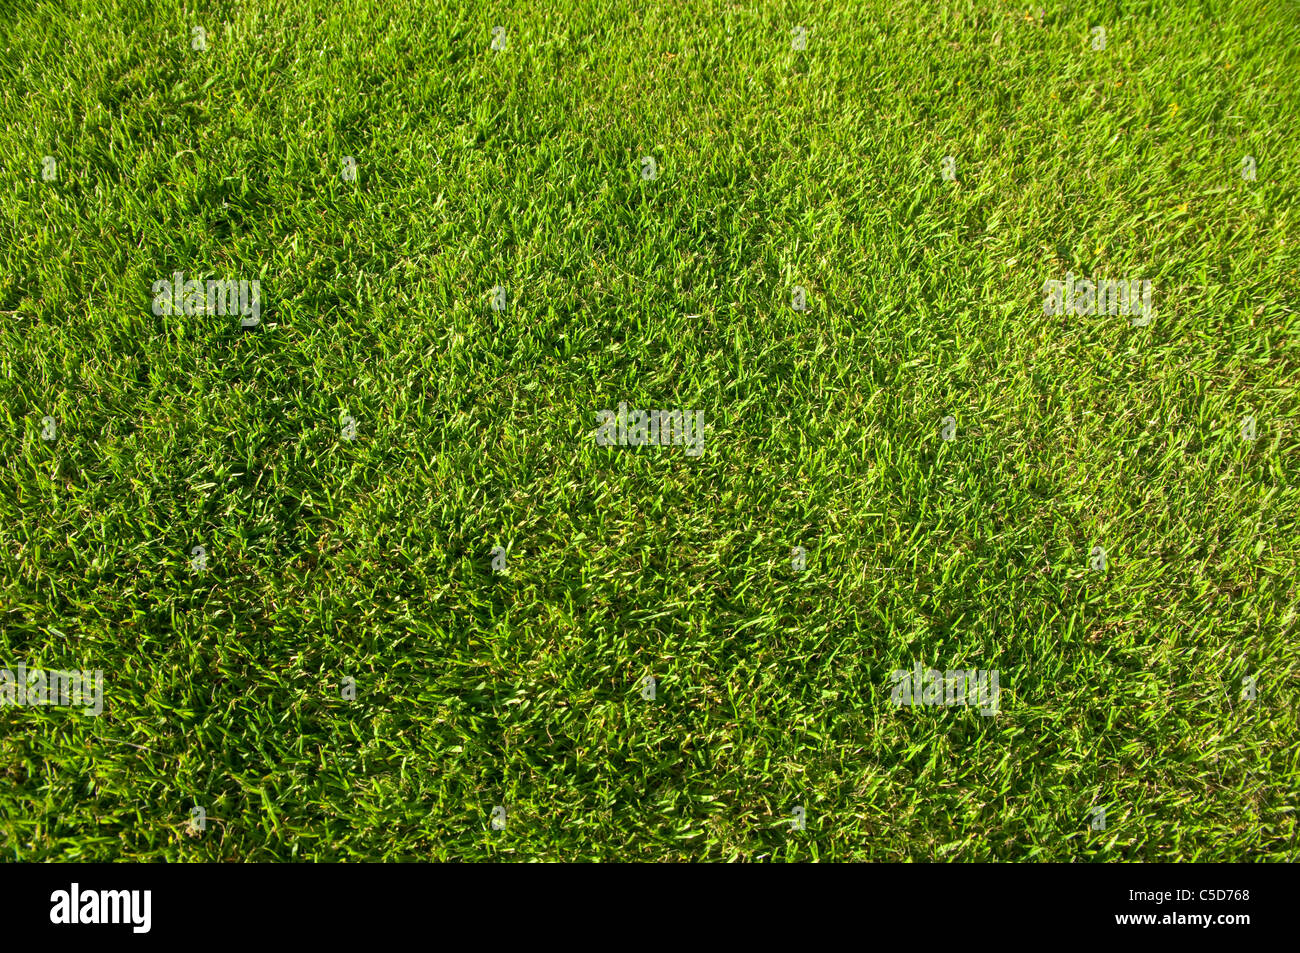 Near perfect green grass / lawn. UK Stock Photo